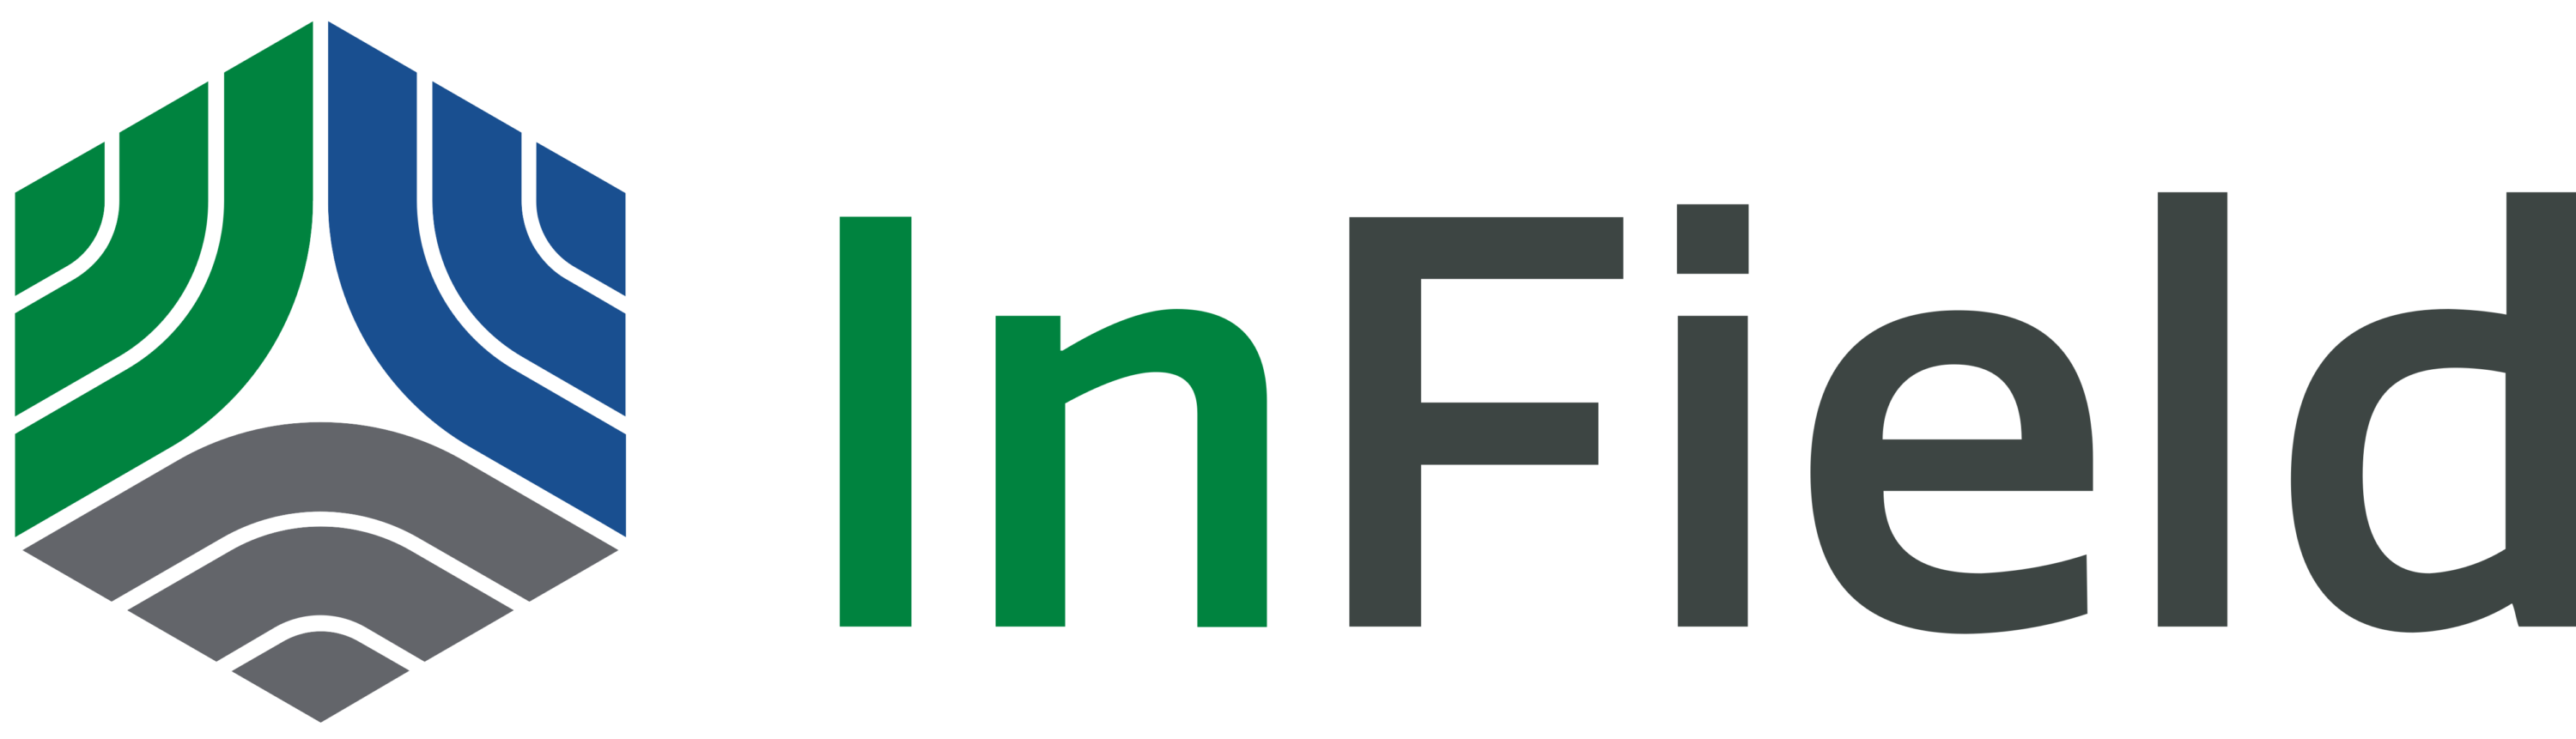 InField Logo